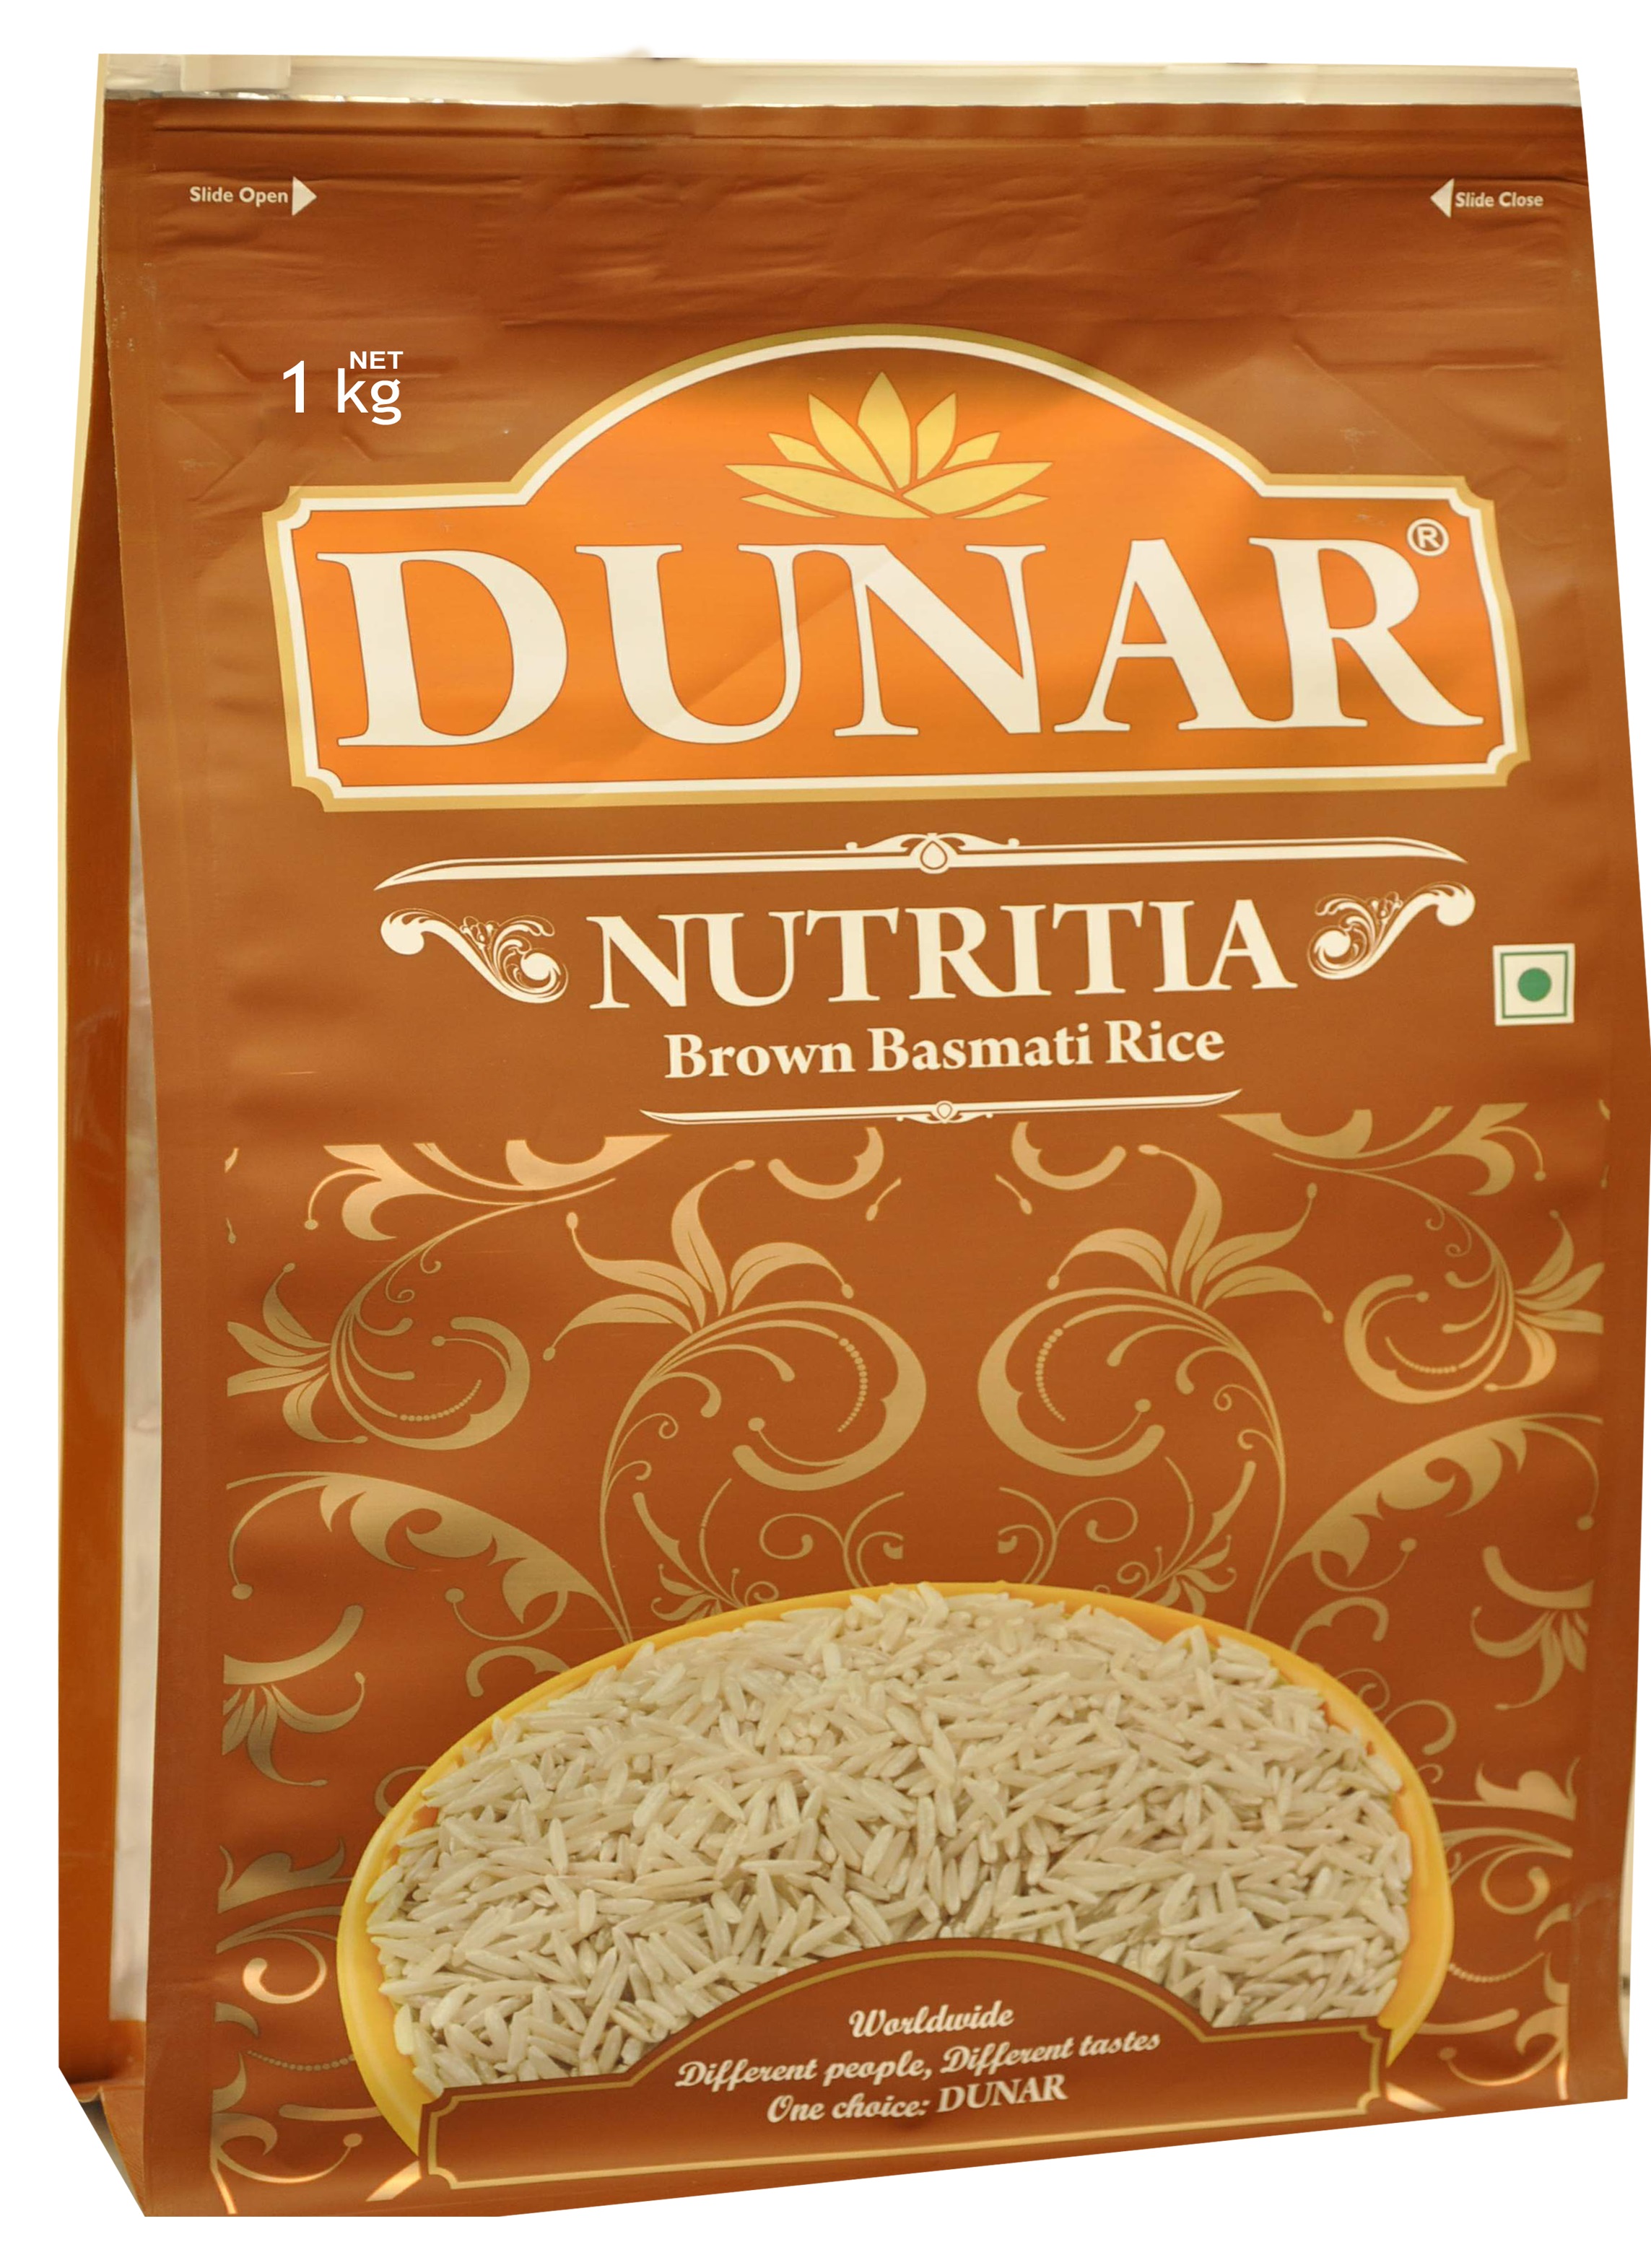 Dunar NUTRITIA Brown Basmati Rice (Дунар НУТРИЦИЯ коричневый рис басмати, НЕшлифованный), 1 кг.